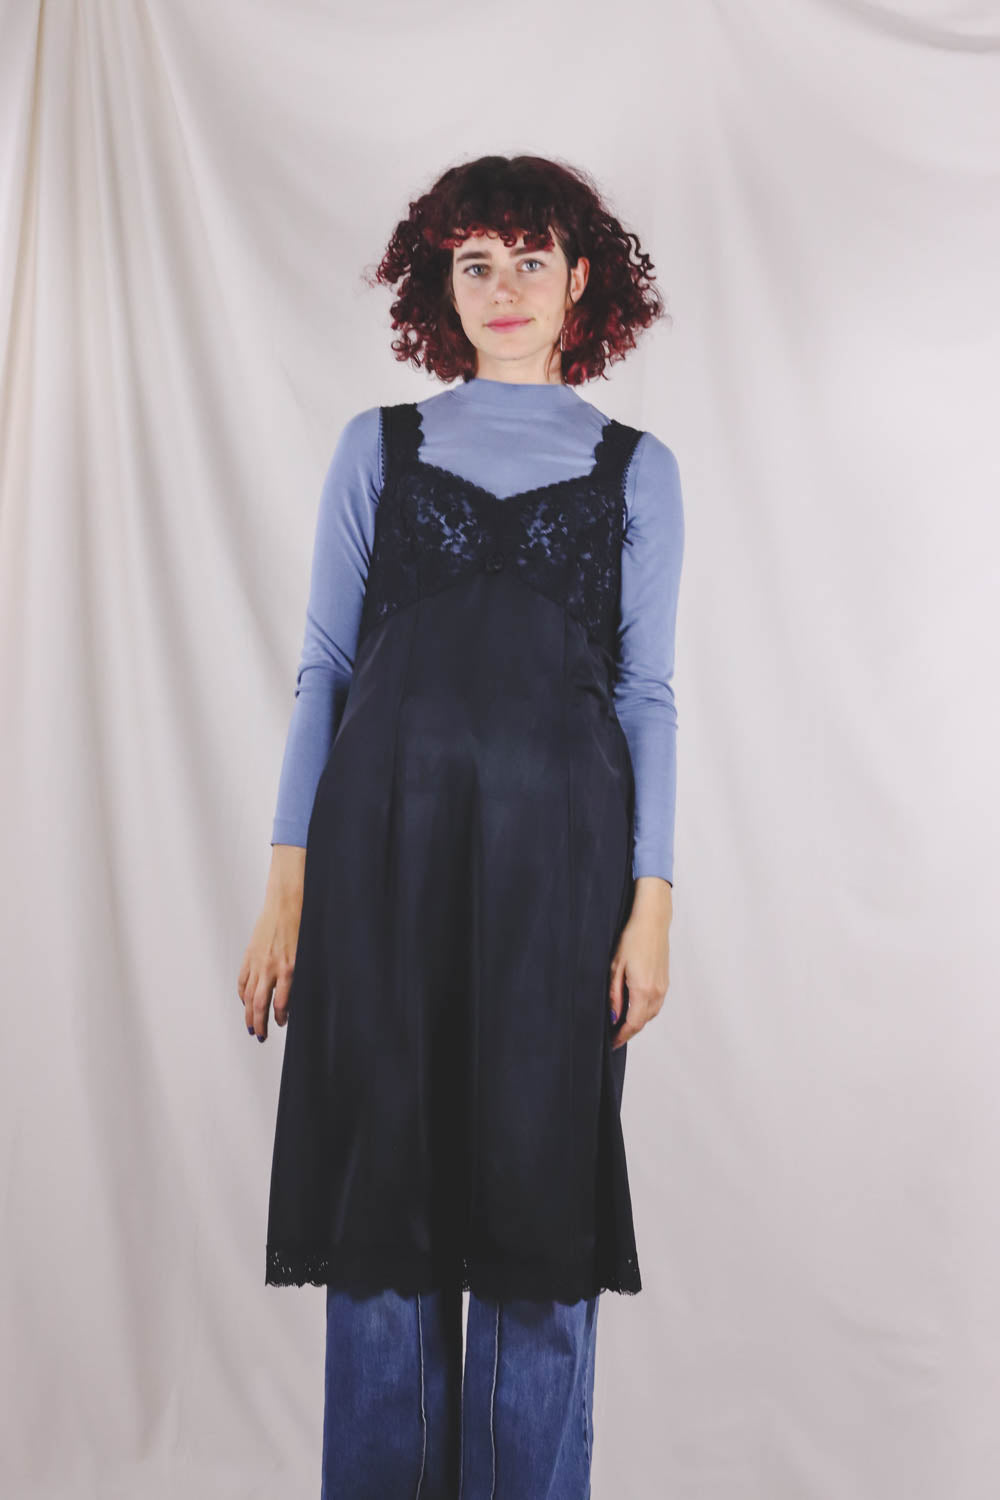 Nelda vintage slip dress